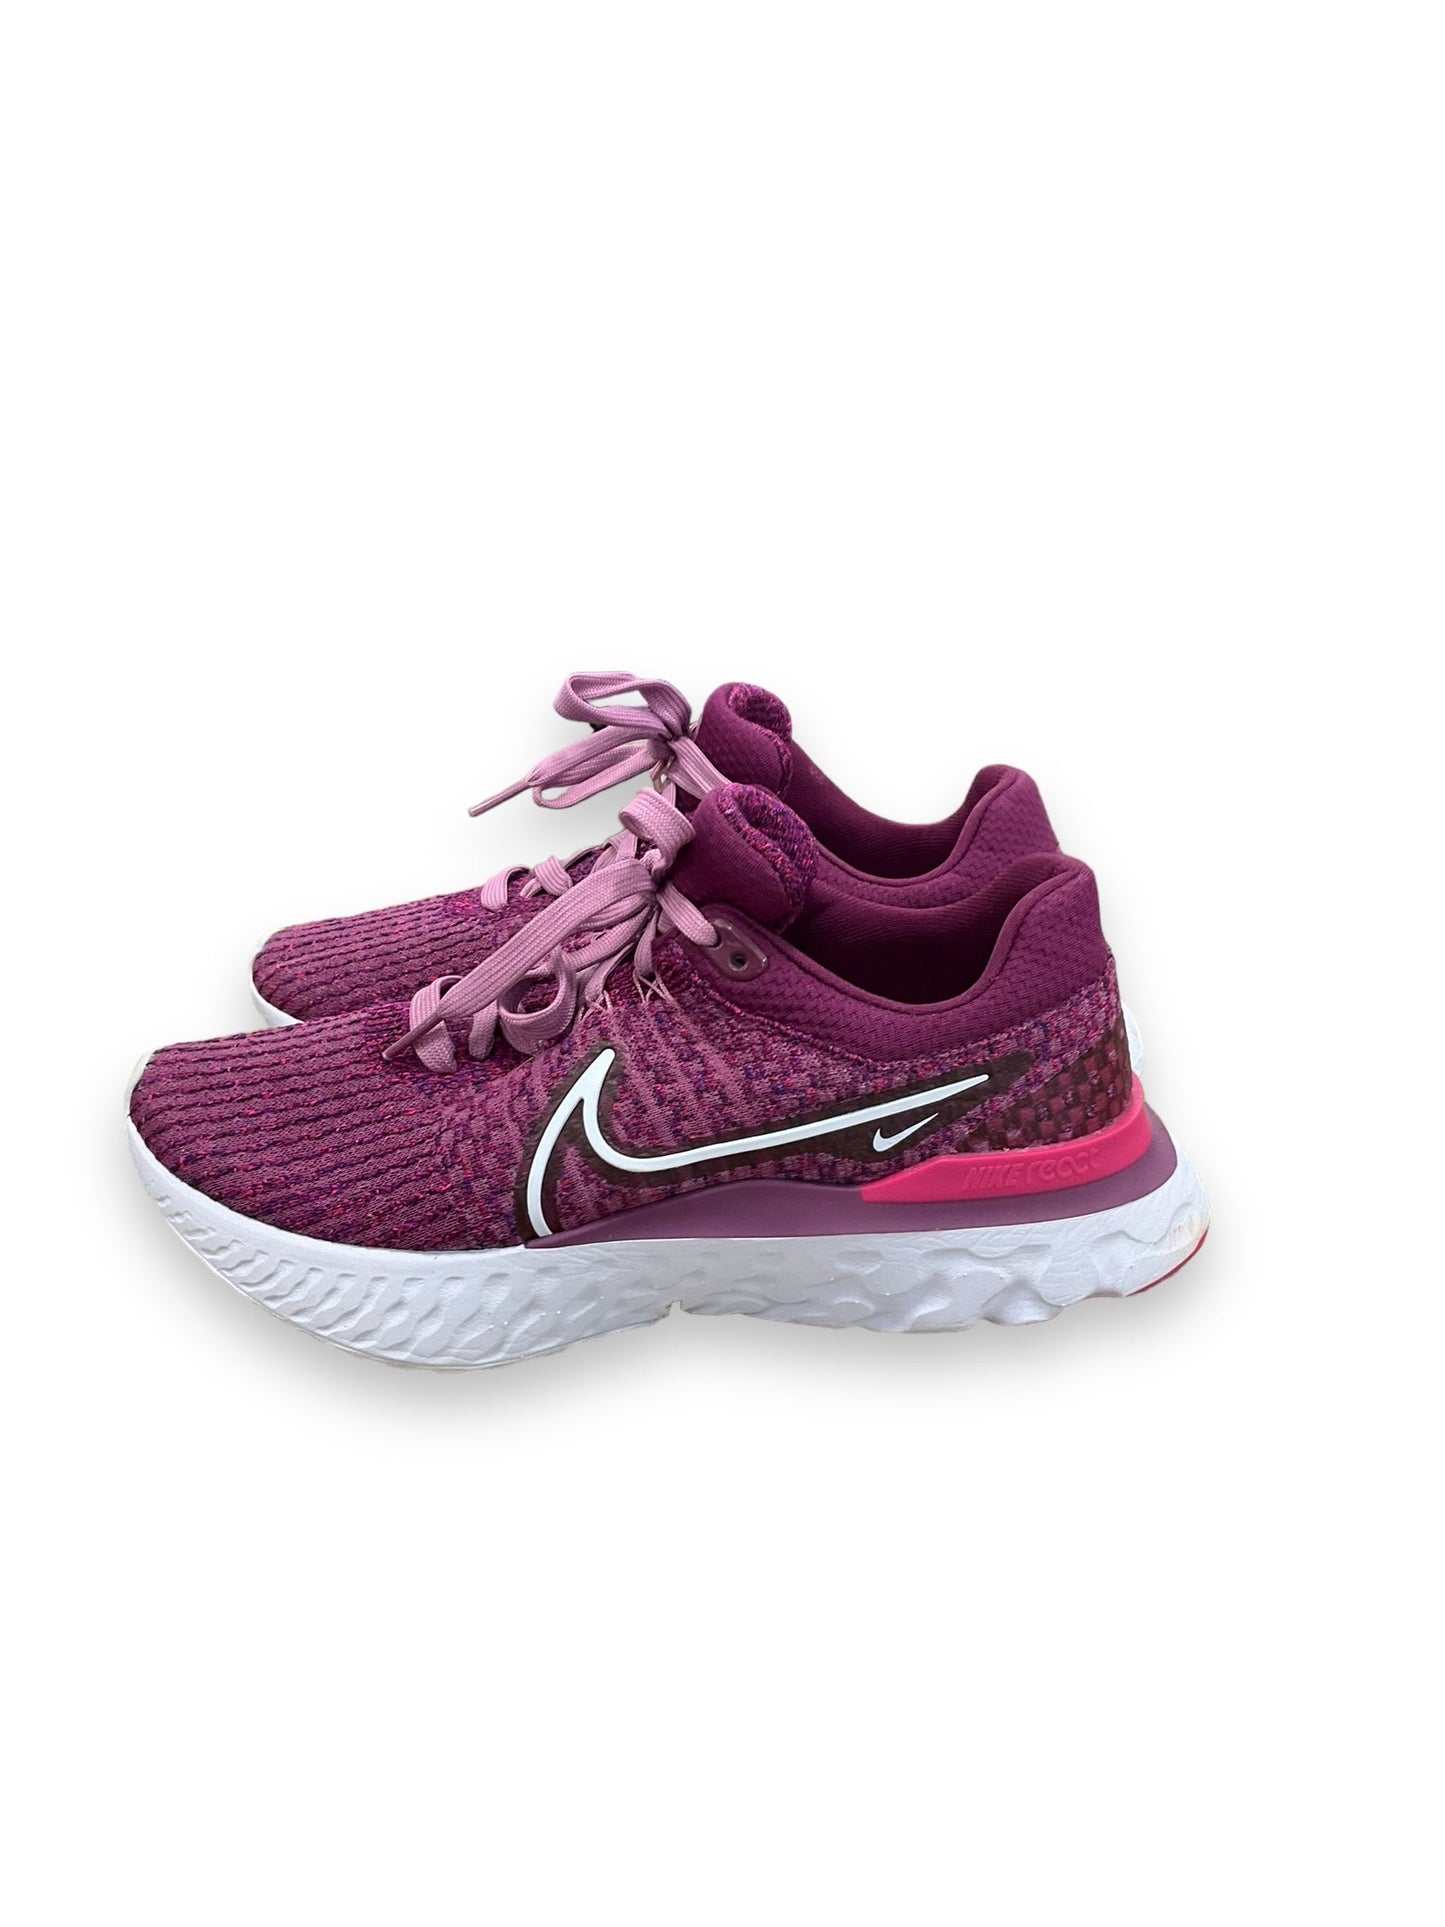 Purple Shoes Athletic Nike, Size 8